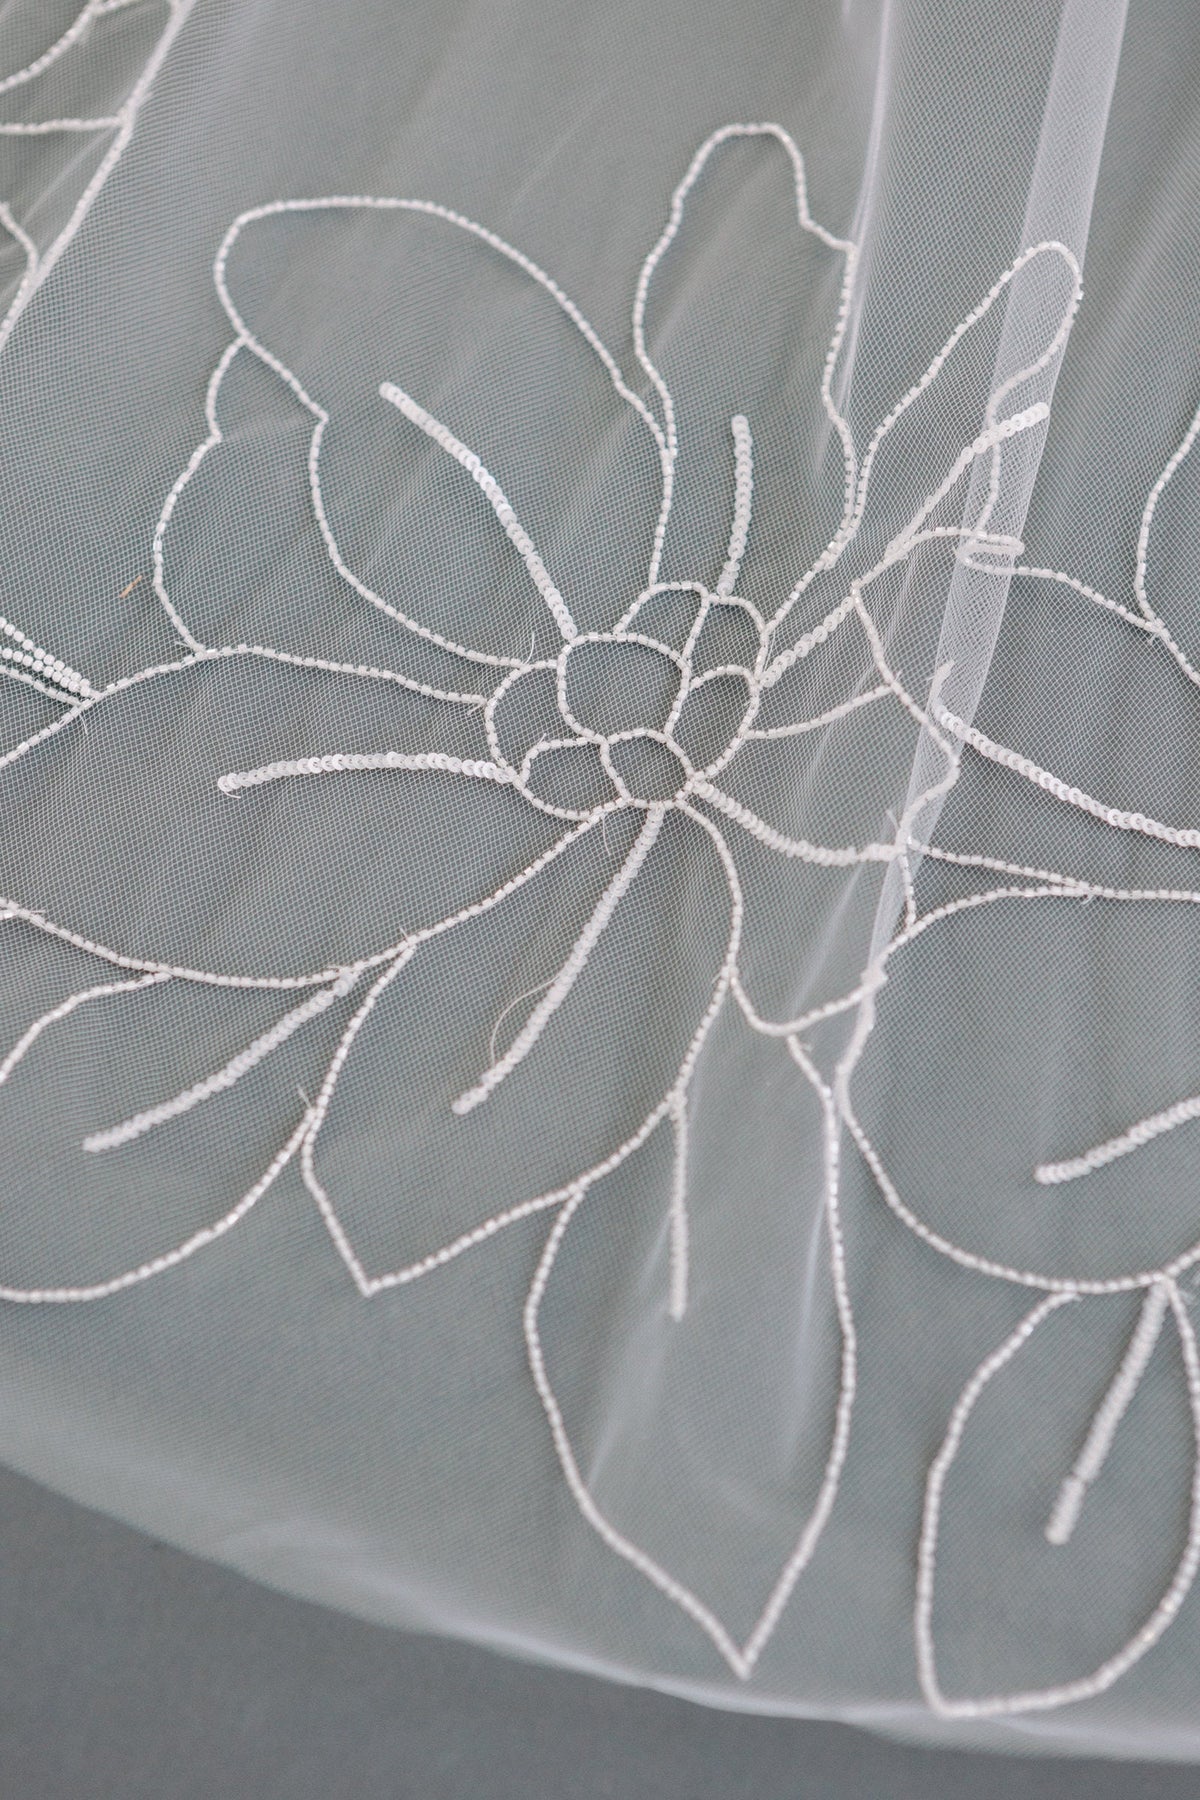 Bridal Veils Floral Motifs Floral Beaded Embroidery Wedding Veil Cathedral Length Floral Design